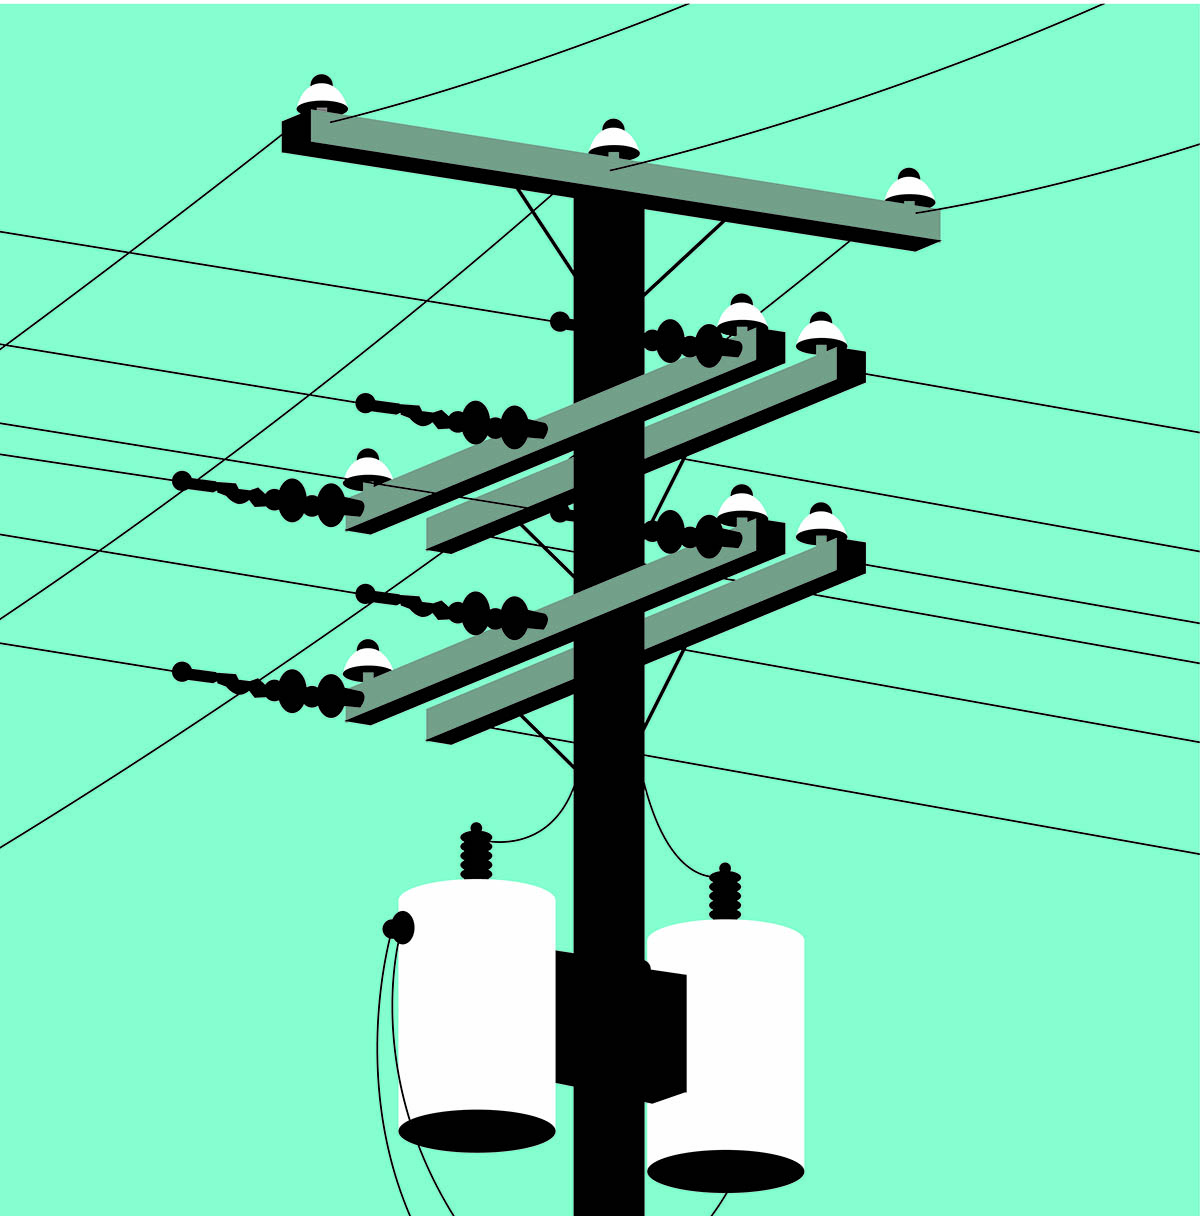 Top of eletric pole